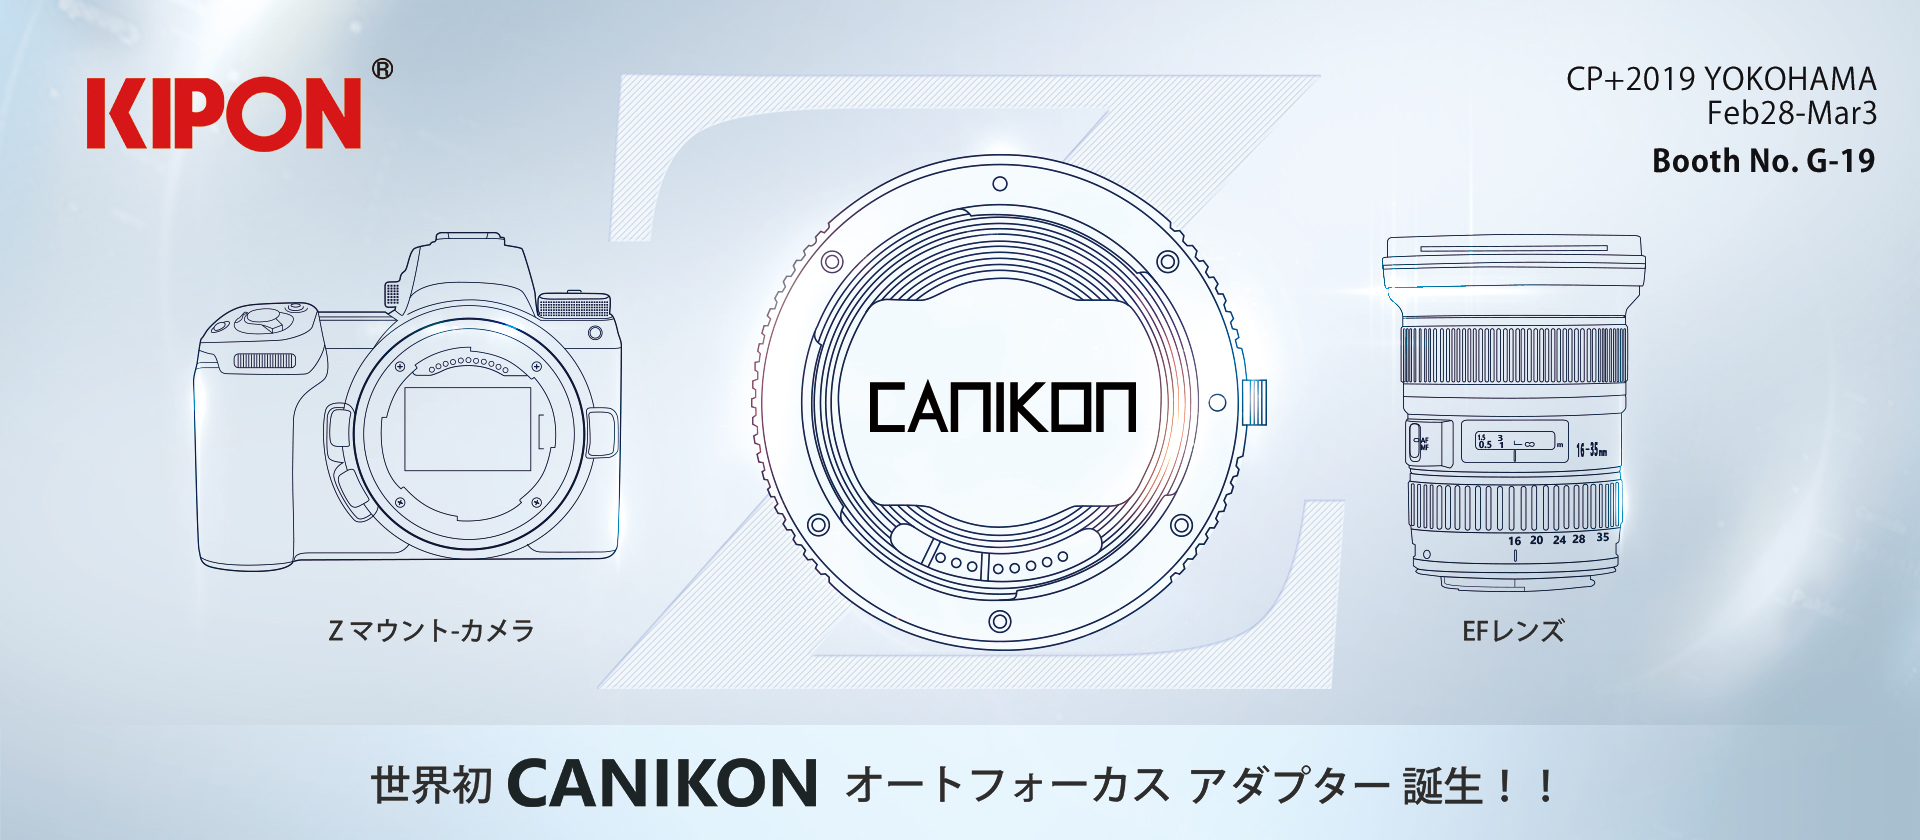 KIPON キヤノンEFレンズをNikon Zで利用するAFアダプタ発表 オートフォーカス対応 - ミラーレスカメラ情報